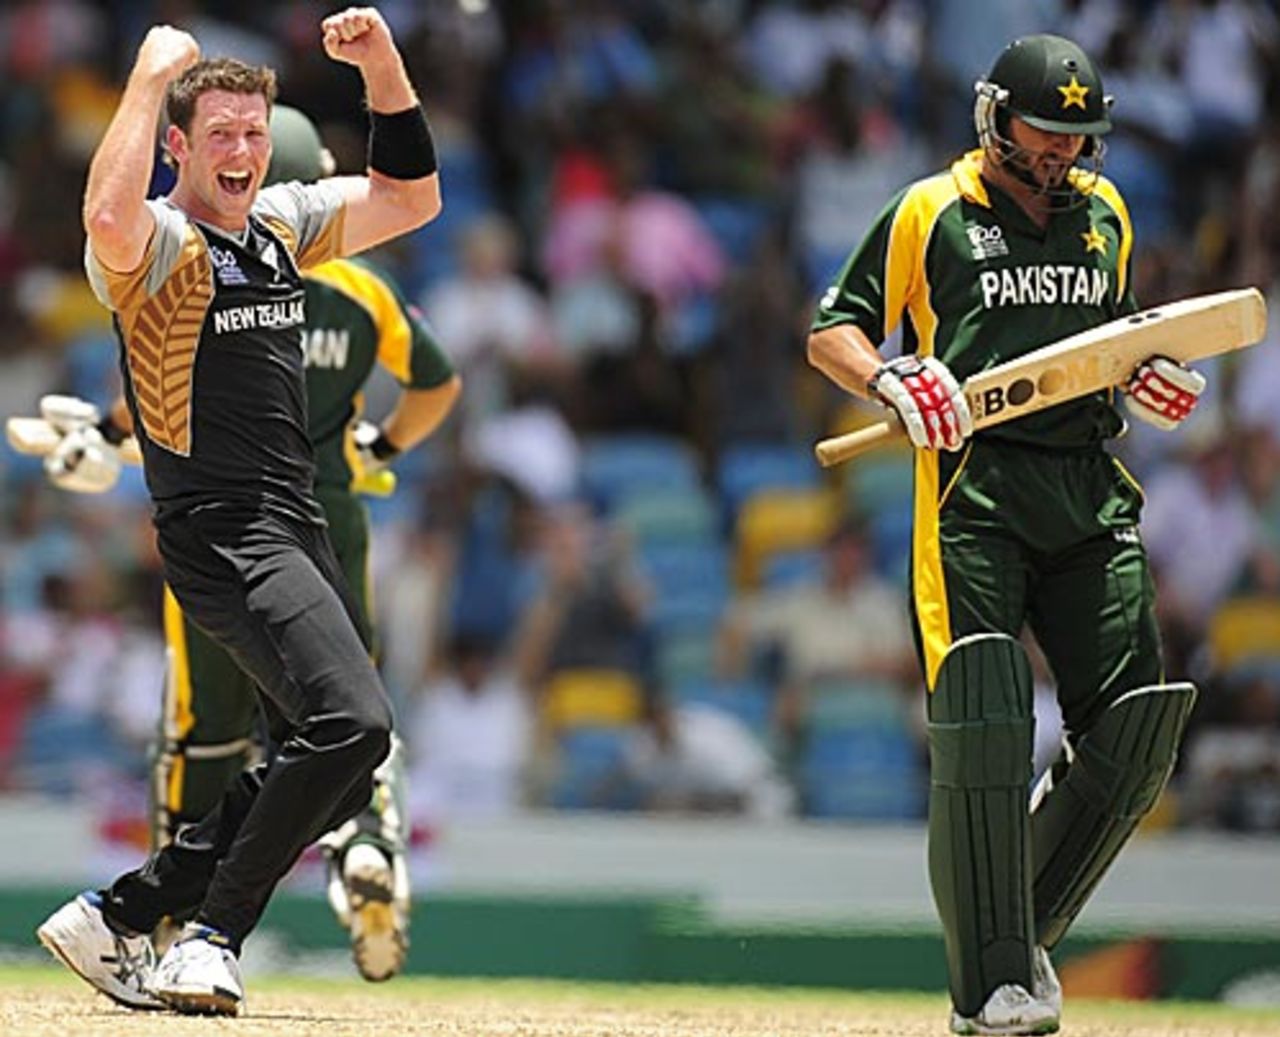 Ian Butler snared Shahid Afridi, New Zealand v Pakistan, Super Eights, Group E, World Twenty20, Barbados, May 8, 2010

